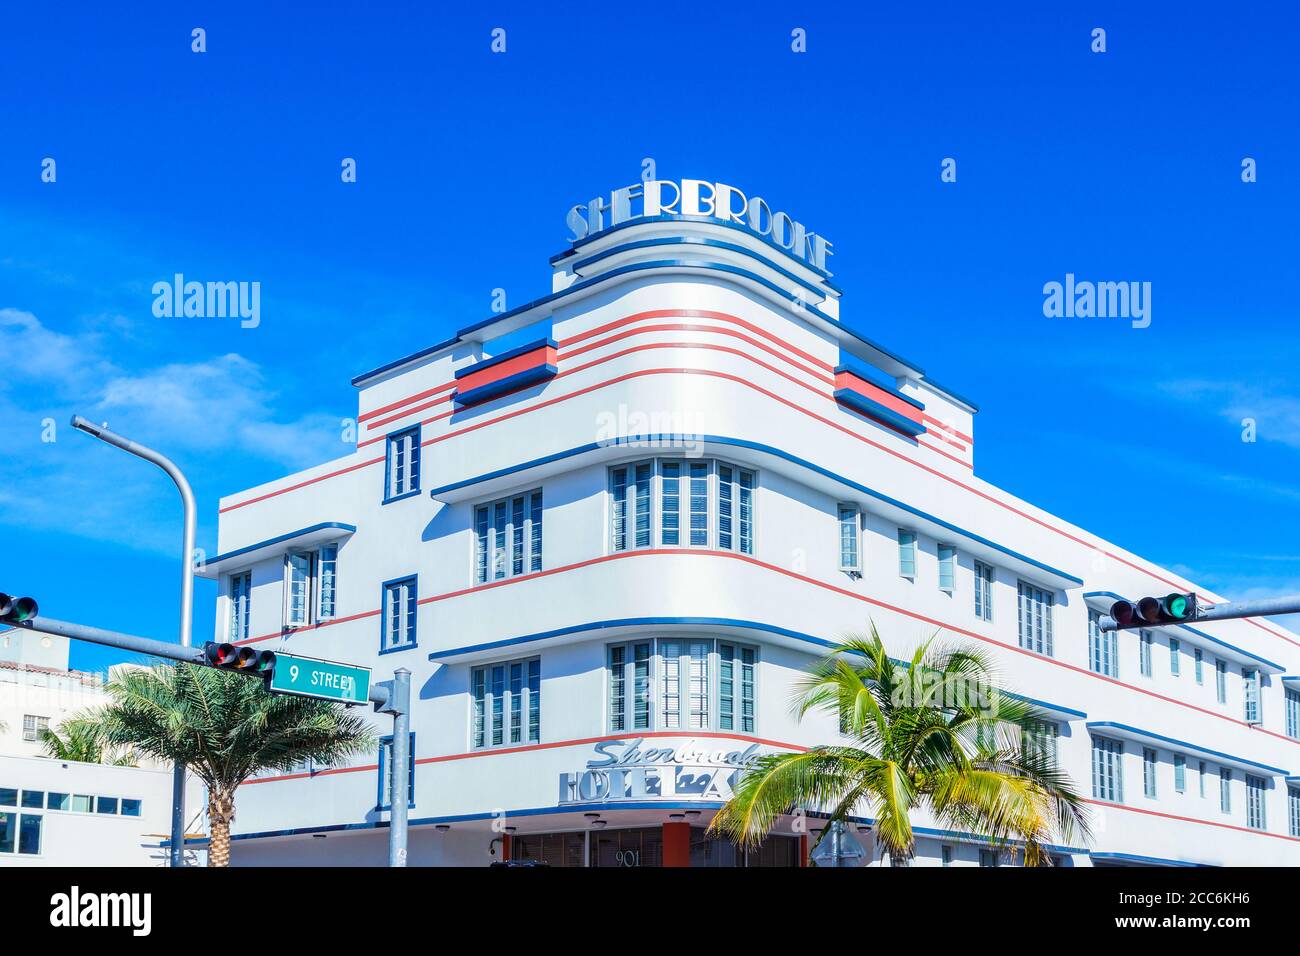 South Beach, Florida - 29. Dezember 2014: Art Deco Sherbrooke Hotel mit wunderschönen Blue Skies. Stockfoto